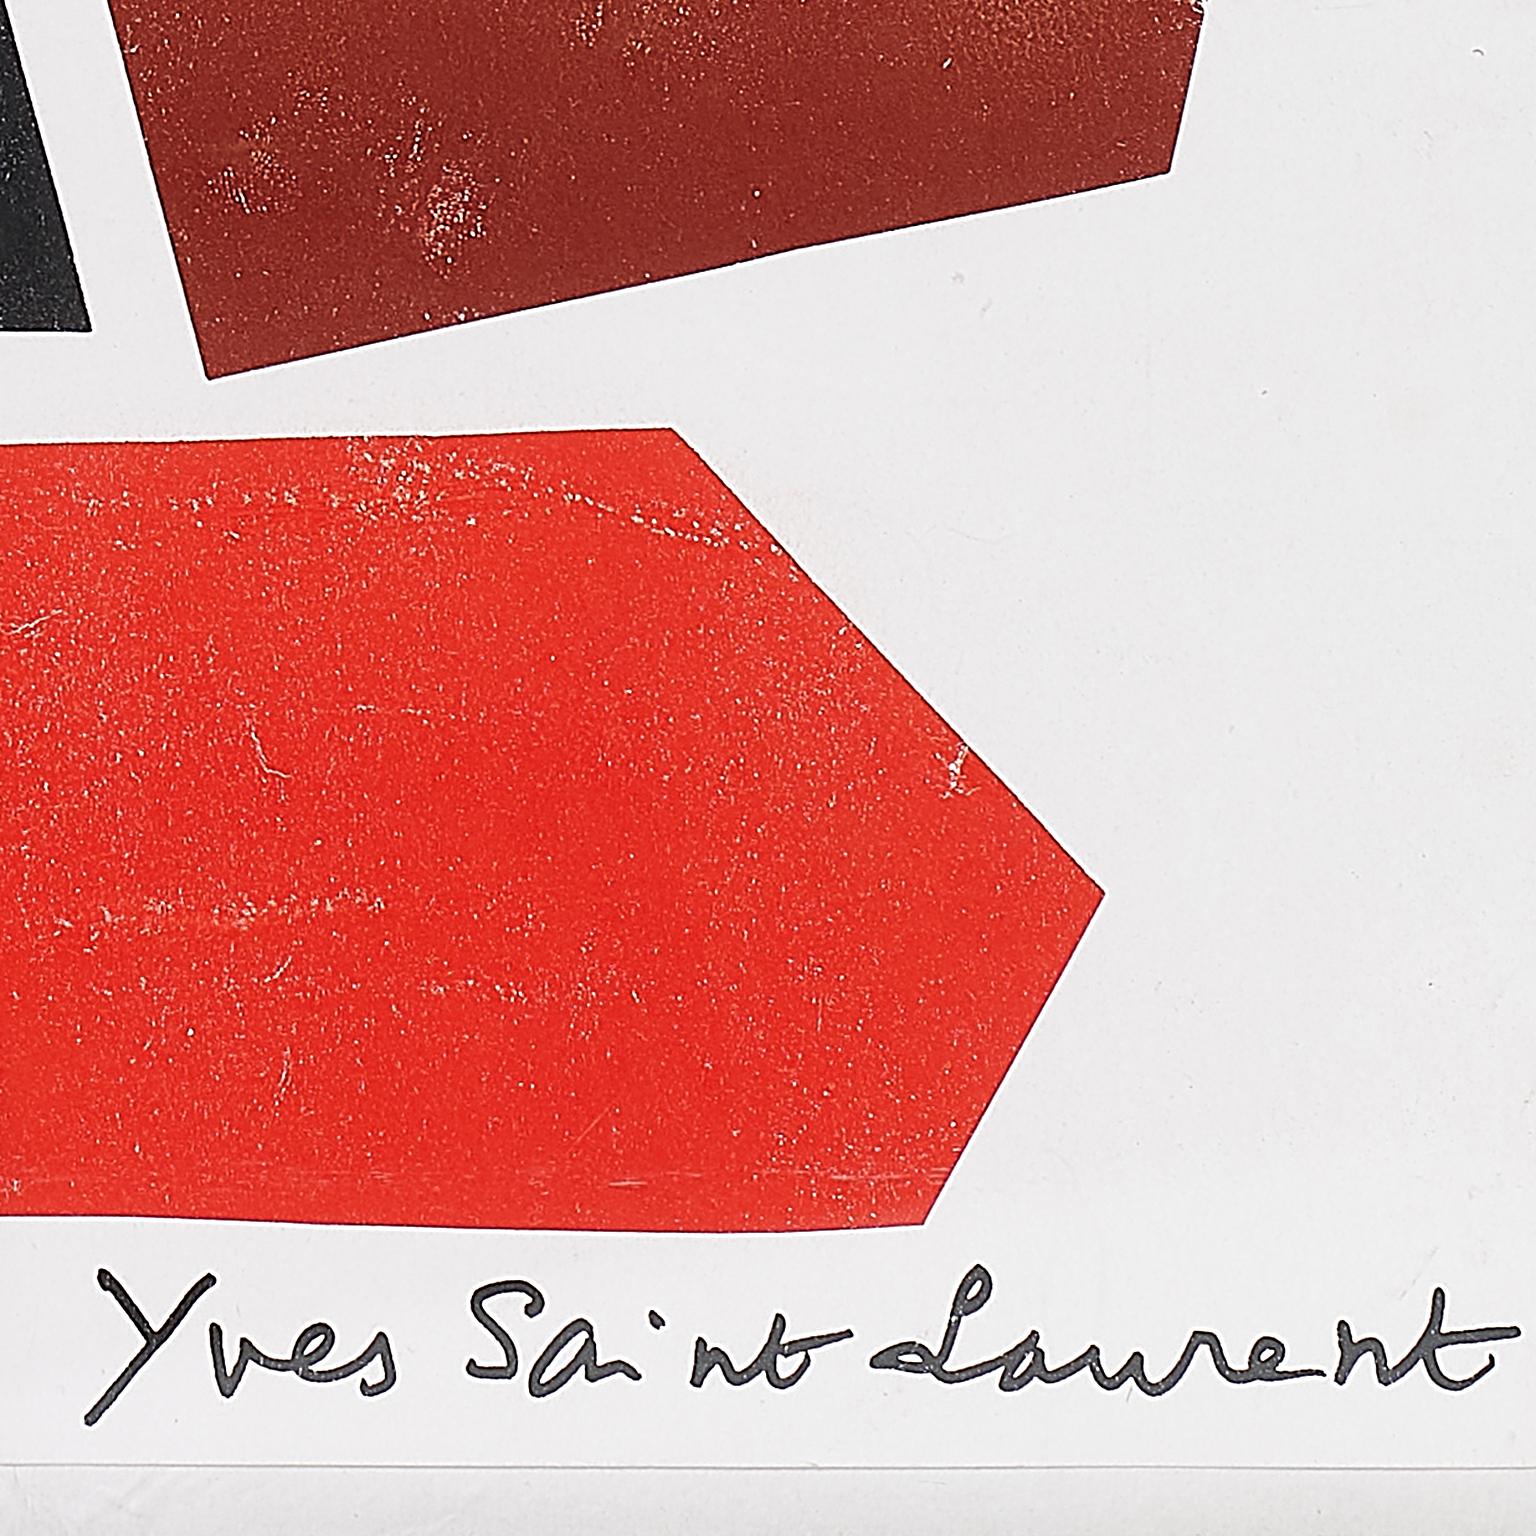 Love 1985 Vintage  - Pop Art Print by Yves Saint Laurent